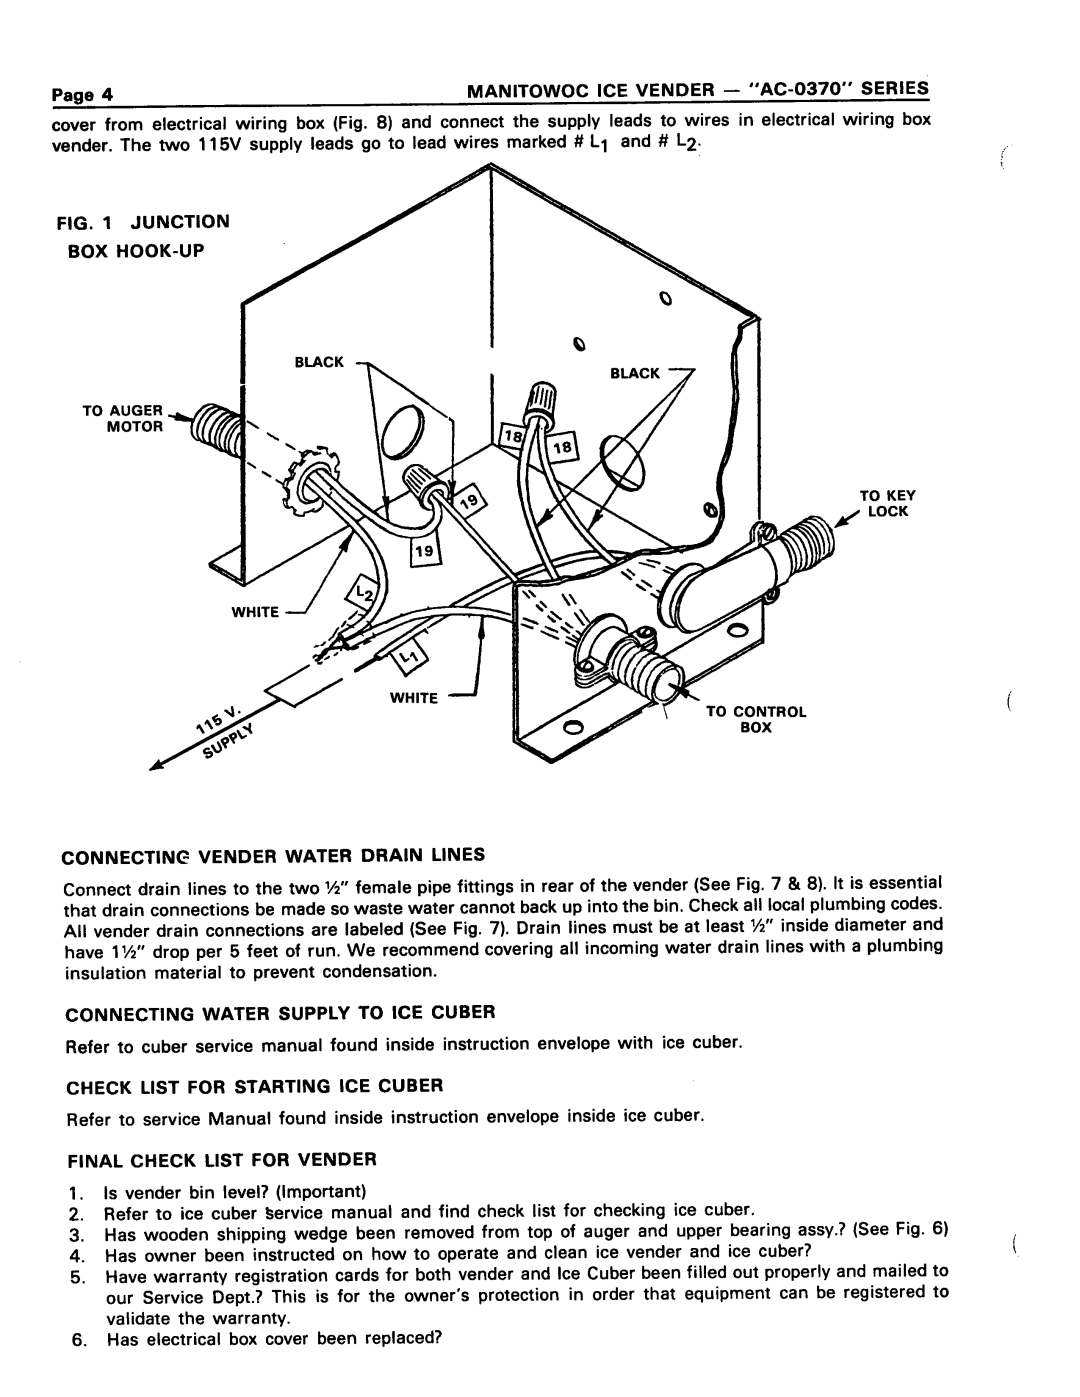 Manitowoc Ice AC-0370 manual 